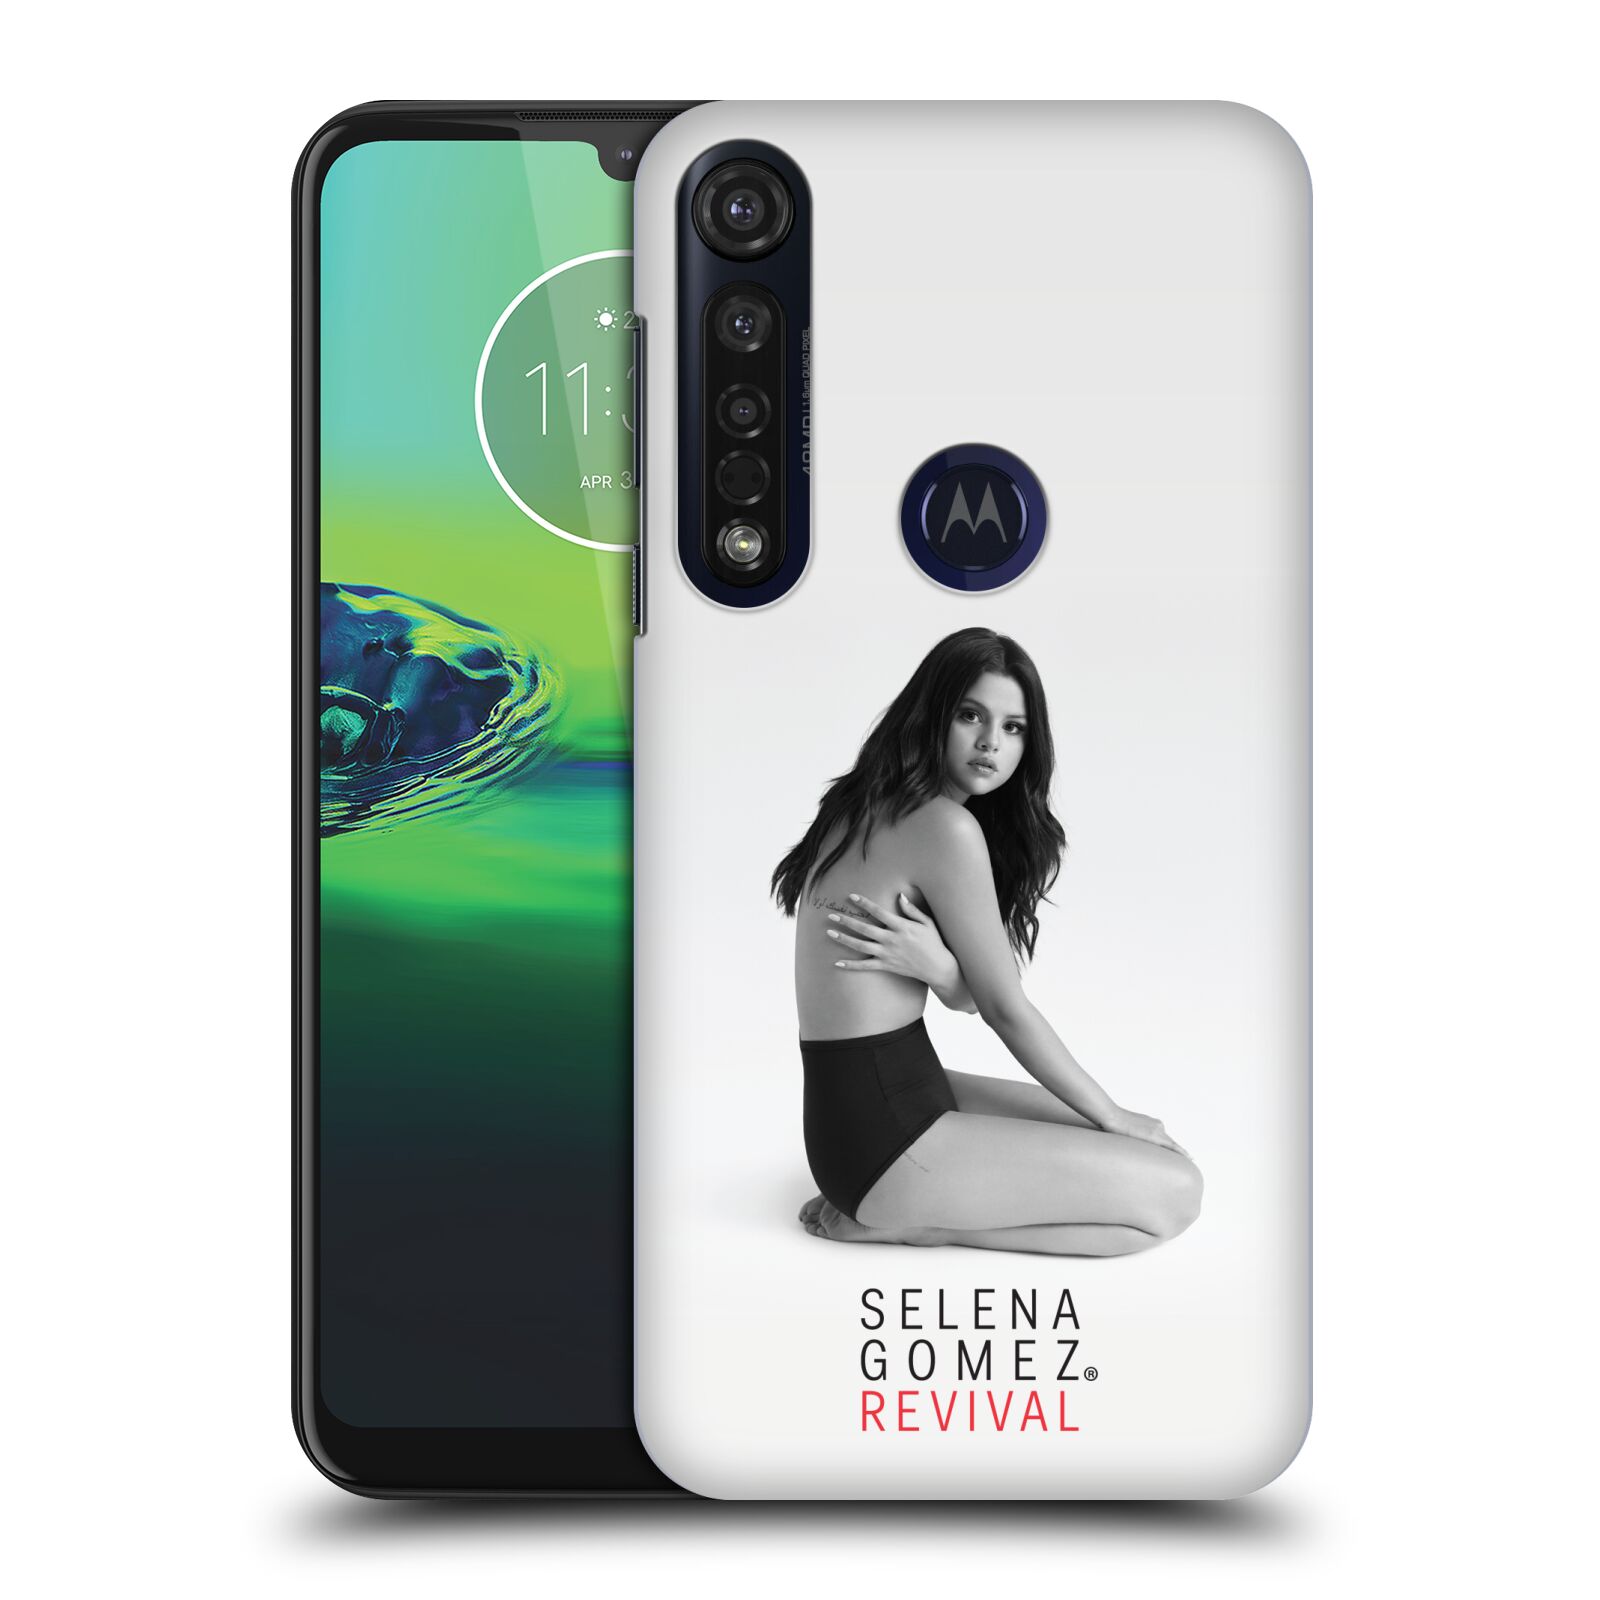 Pouzdro na mobil Motorola Moto G8 PLUS - HEAD CASE - Zpěvačka Selena Gomez foto Revival profil